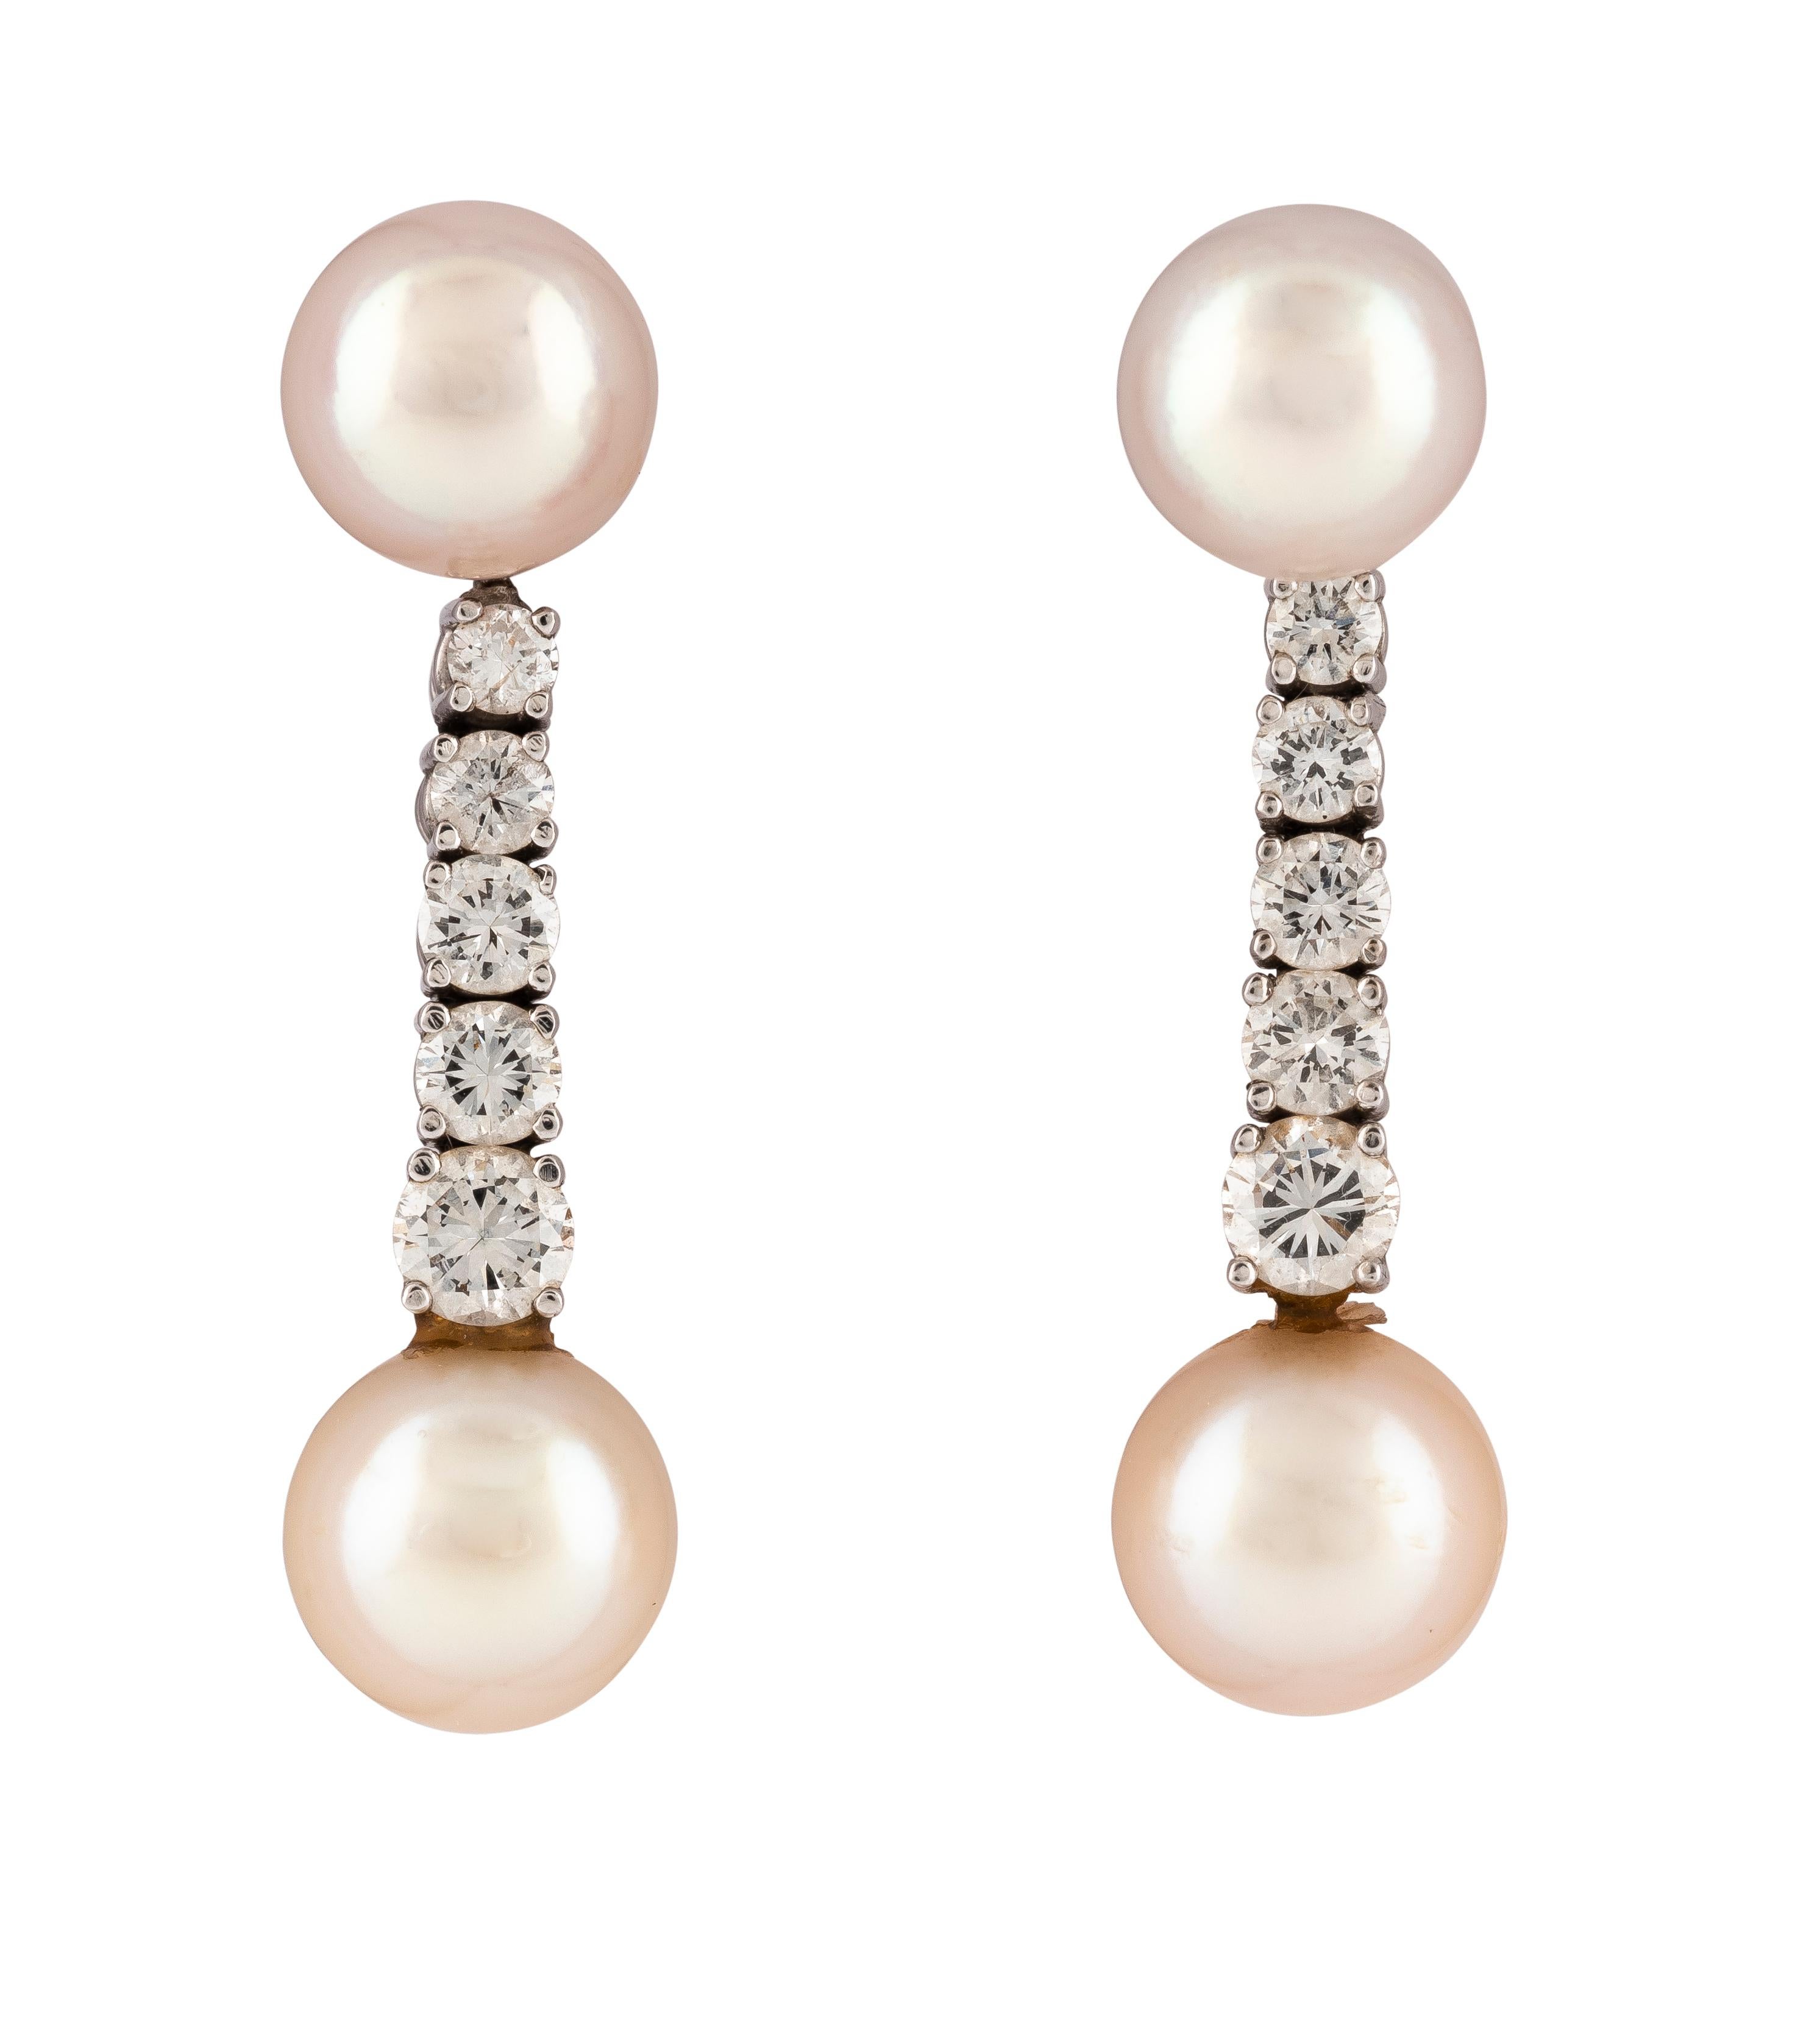 Retro Pair of Pearl Earrings with Diamond